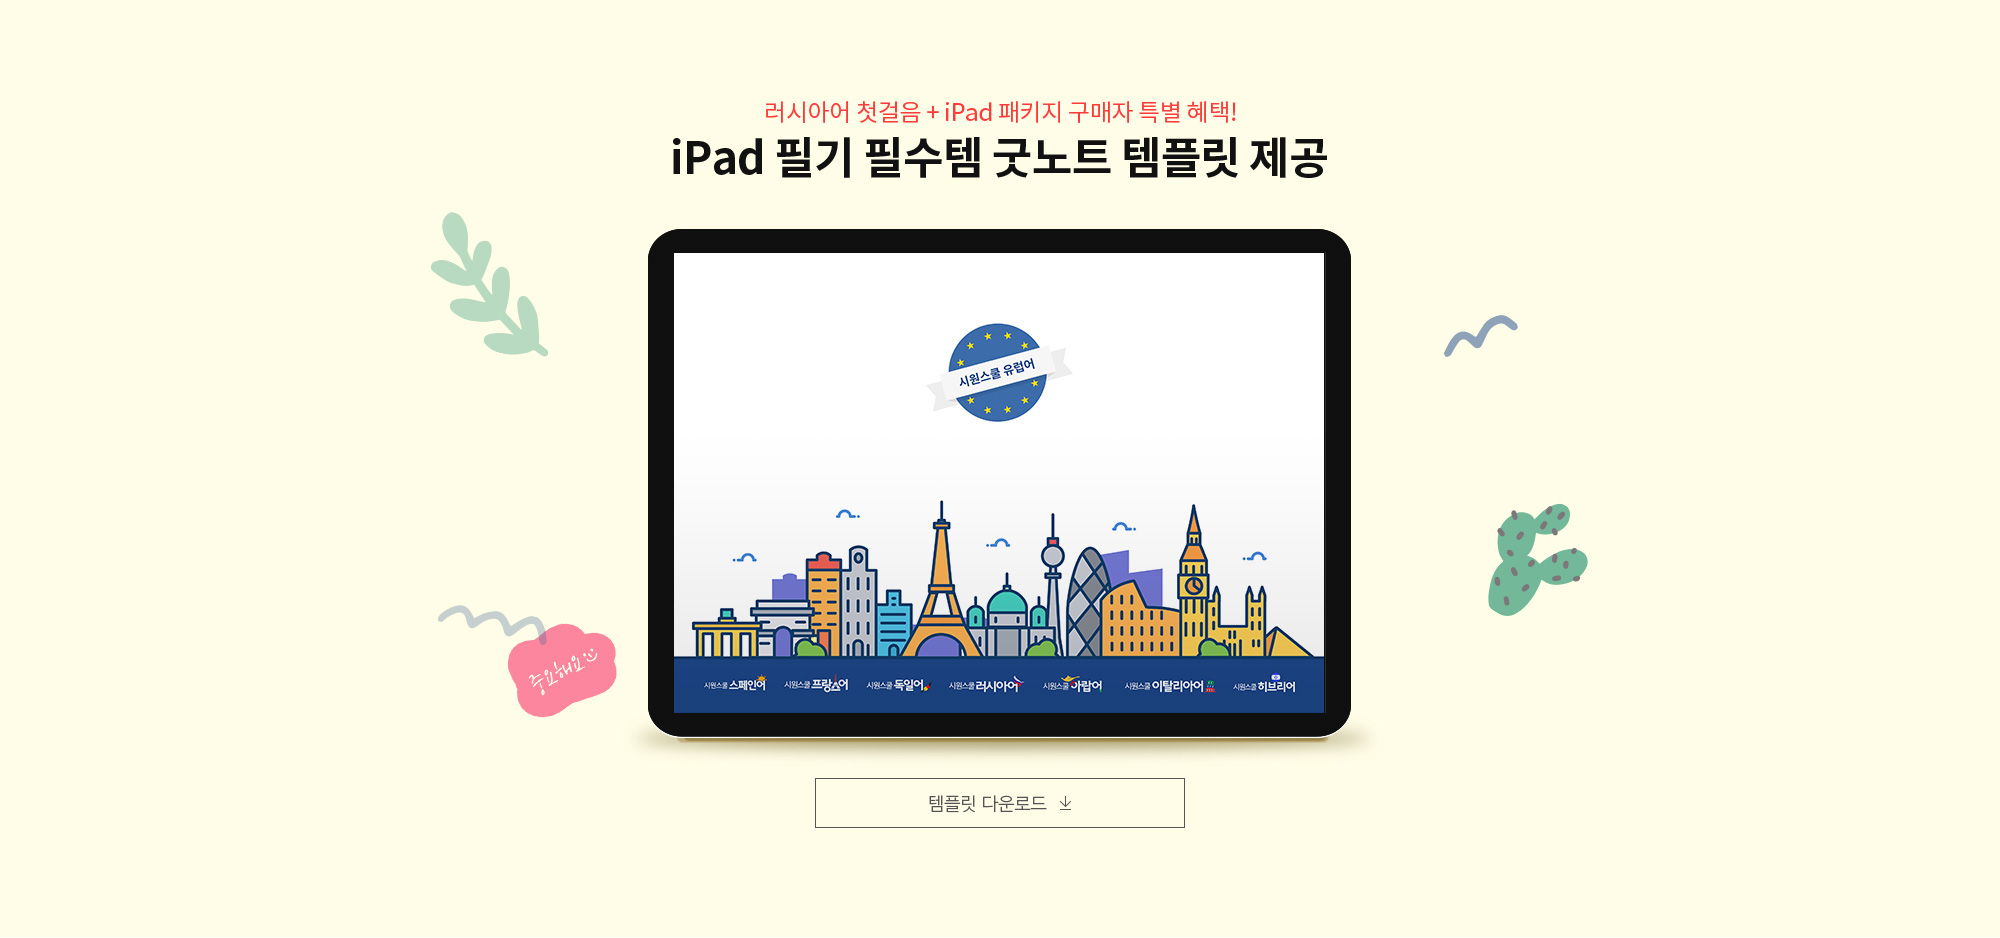 iPad 왕초보 패키지 구매자 특별 혜택! - iPad 필기 필수템 굿노트 템플릿 제공